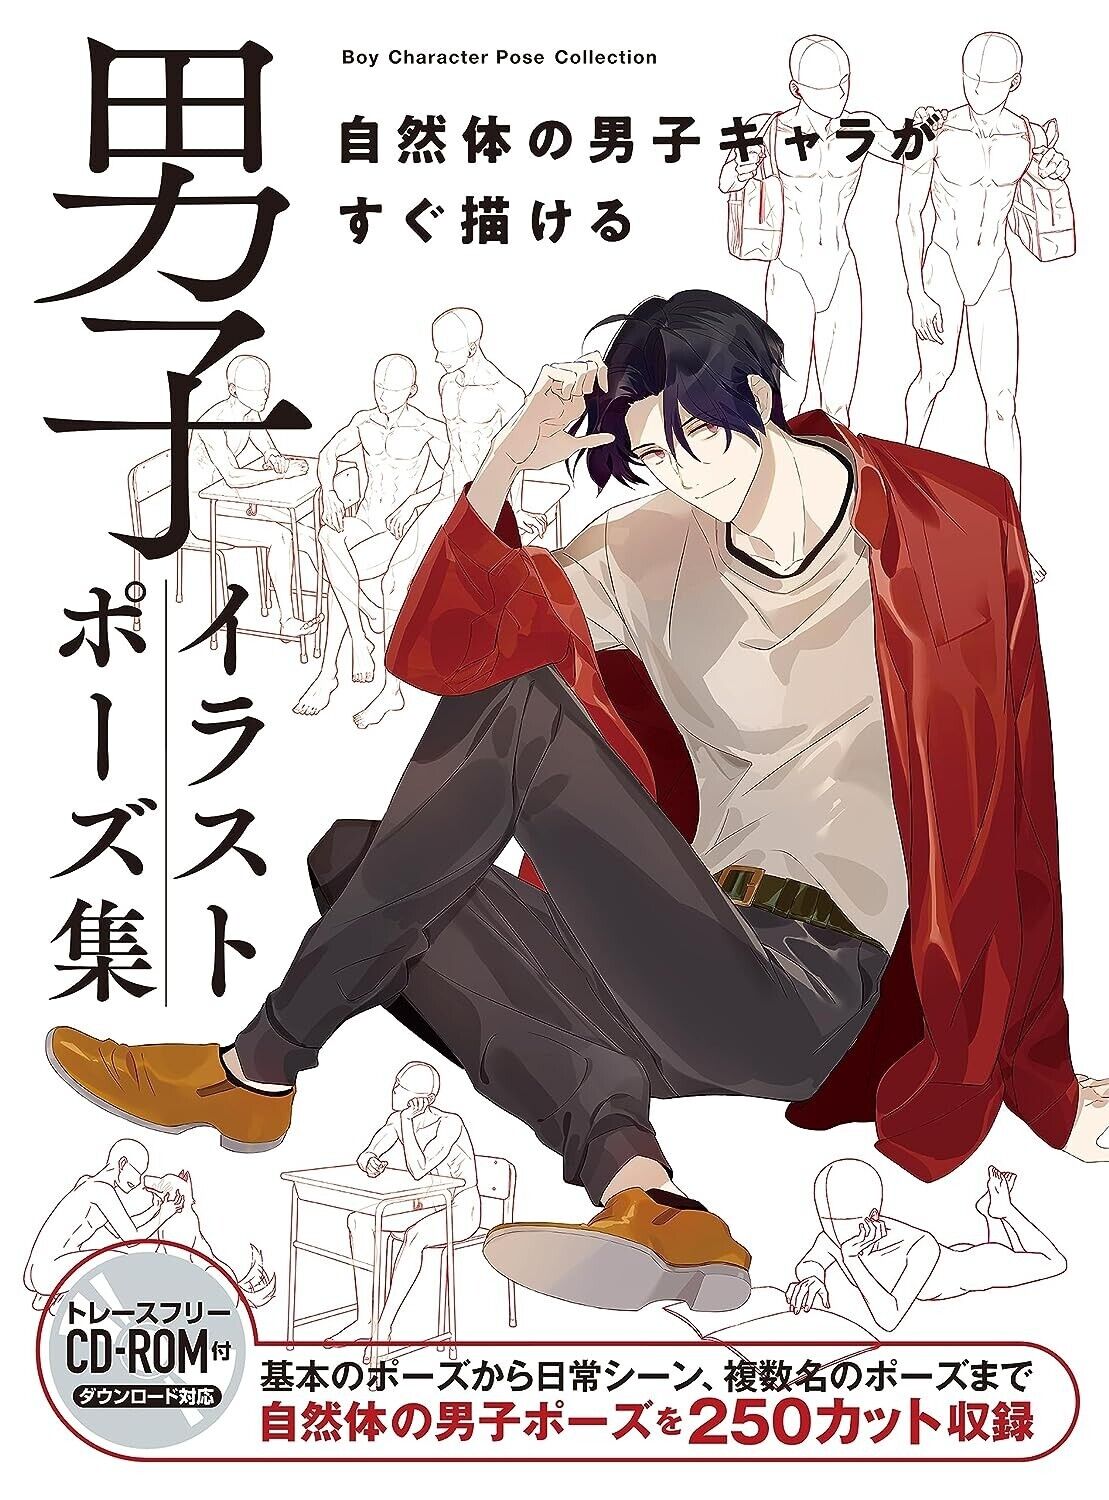 Boy Character Pose Book  w/CD-ROM | JAPAN How To Draw Manga Art